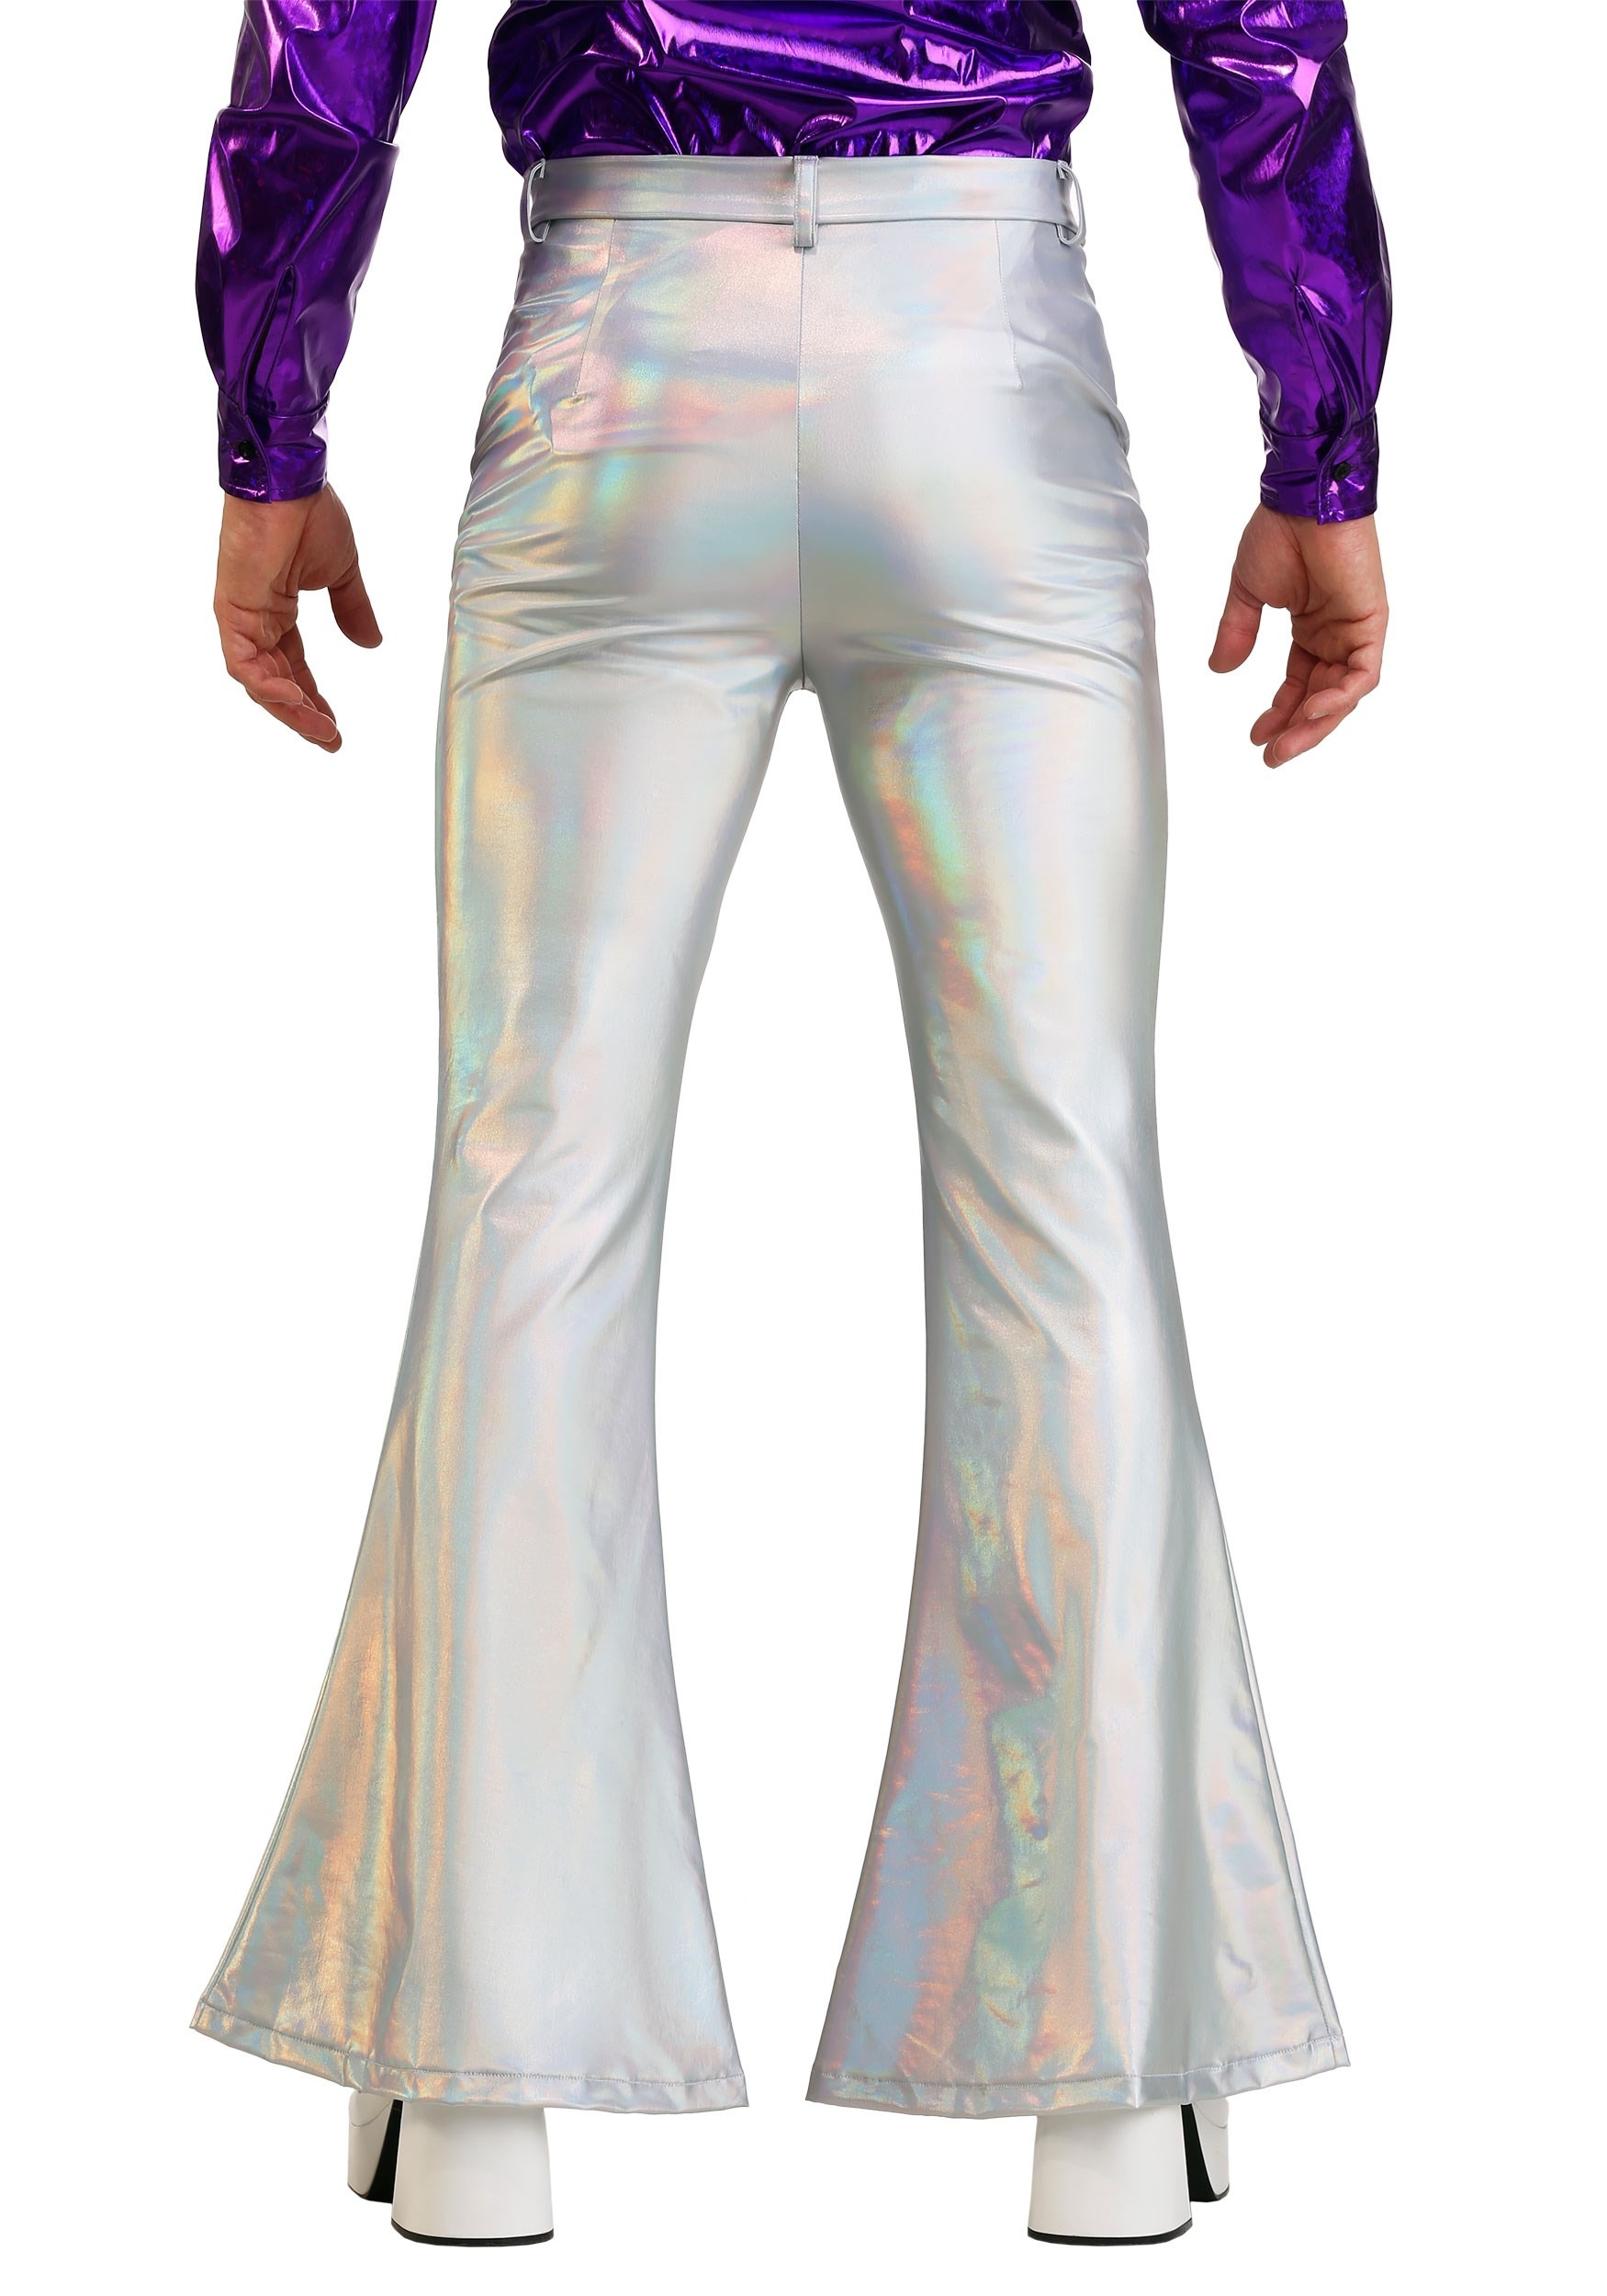 White Bell Bottom Disco Pants 70s  The Costume Shoppe